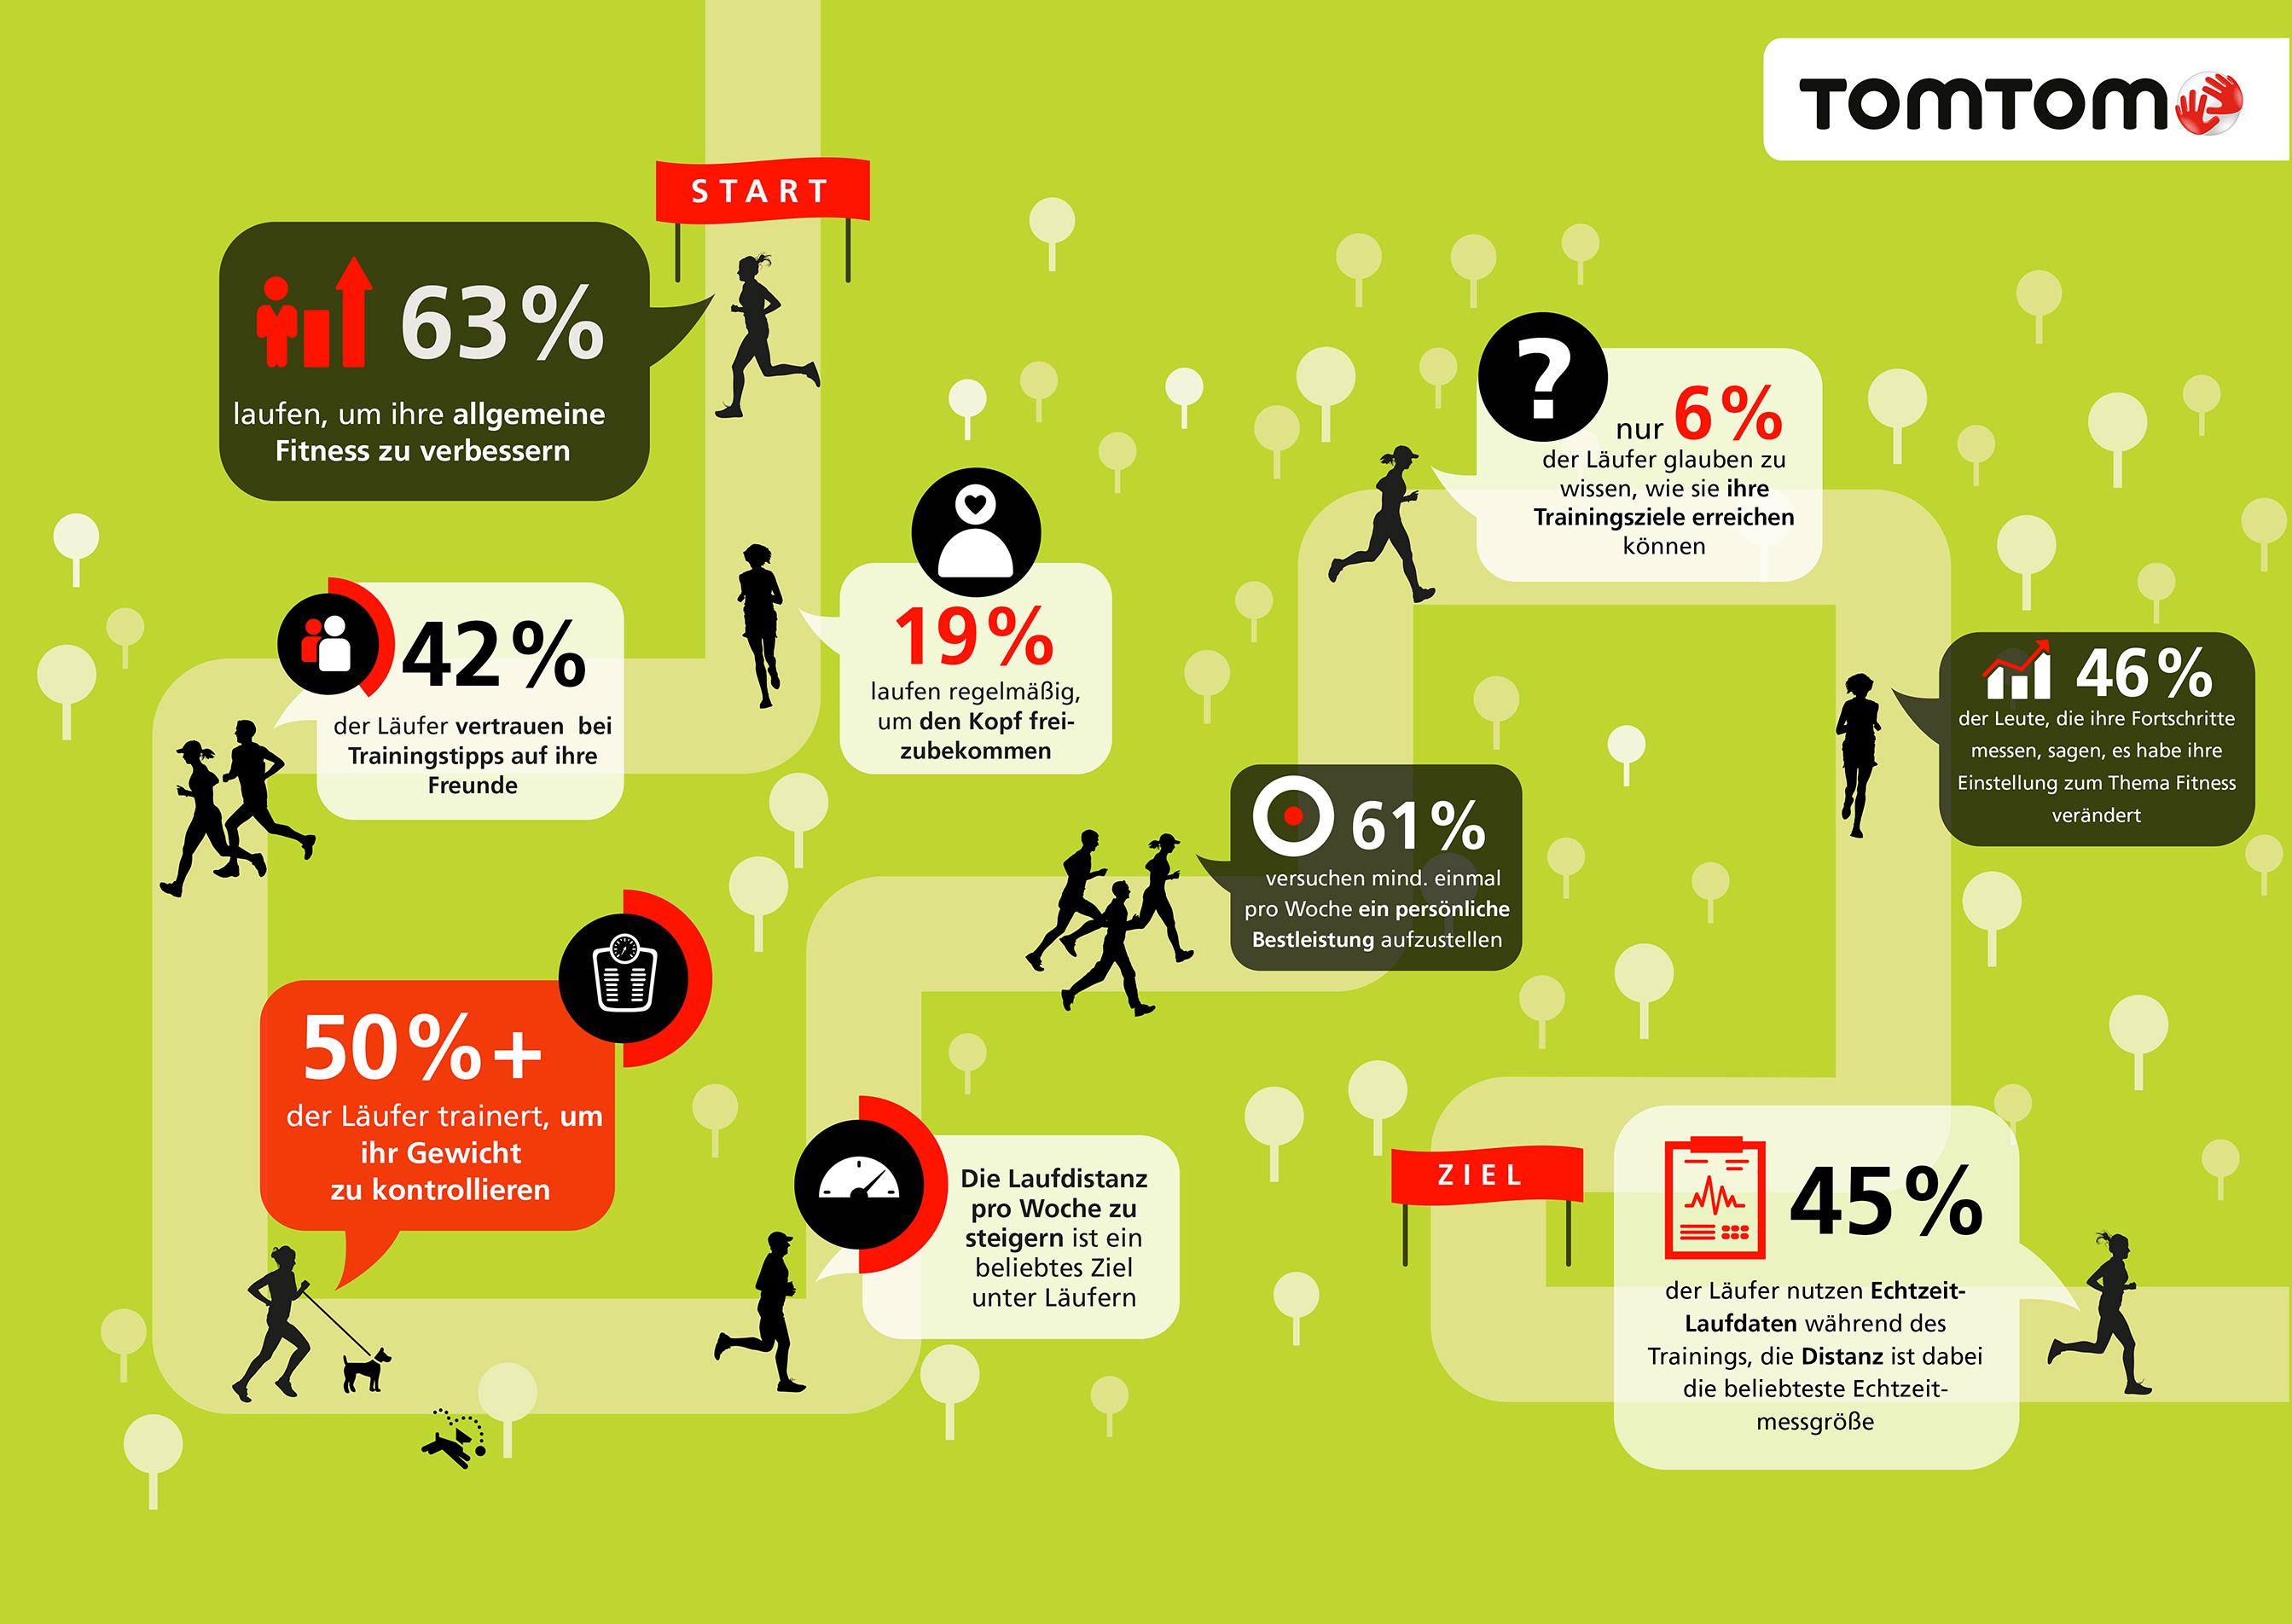 Tom Tom Infographic15